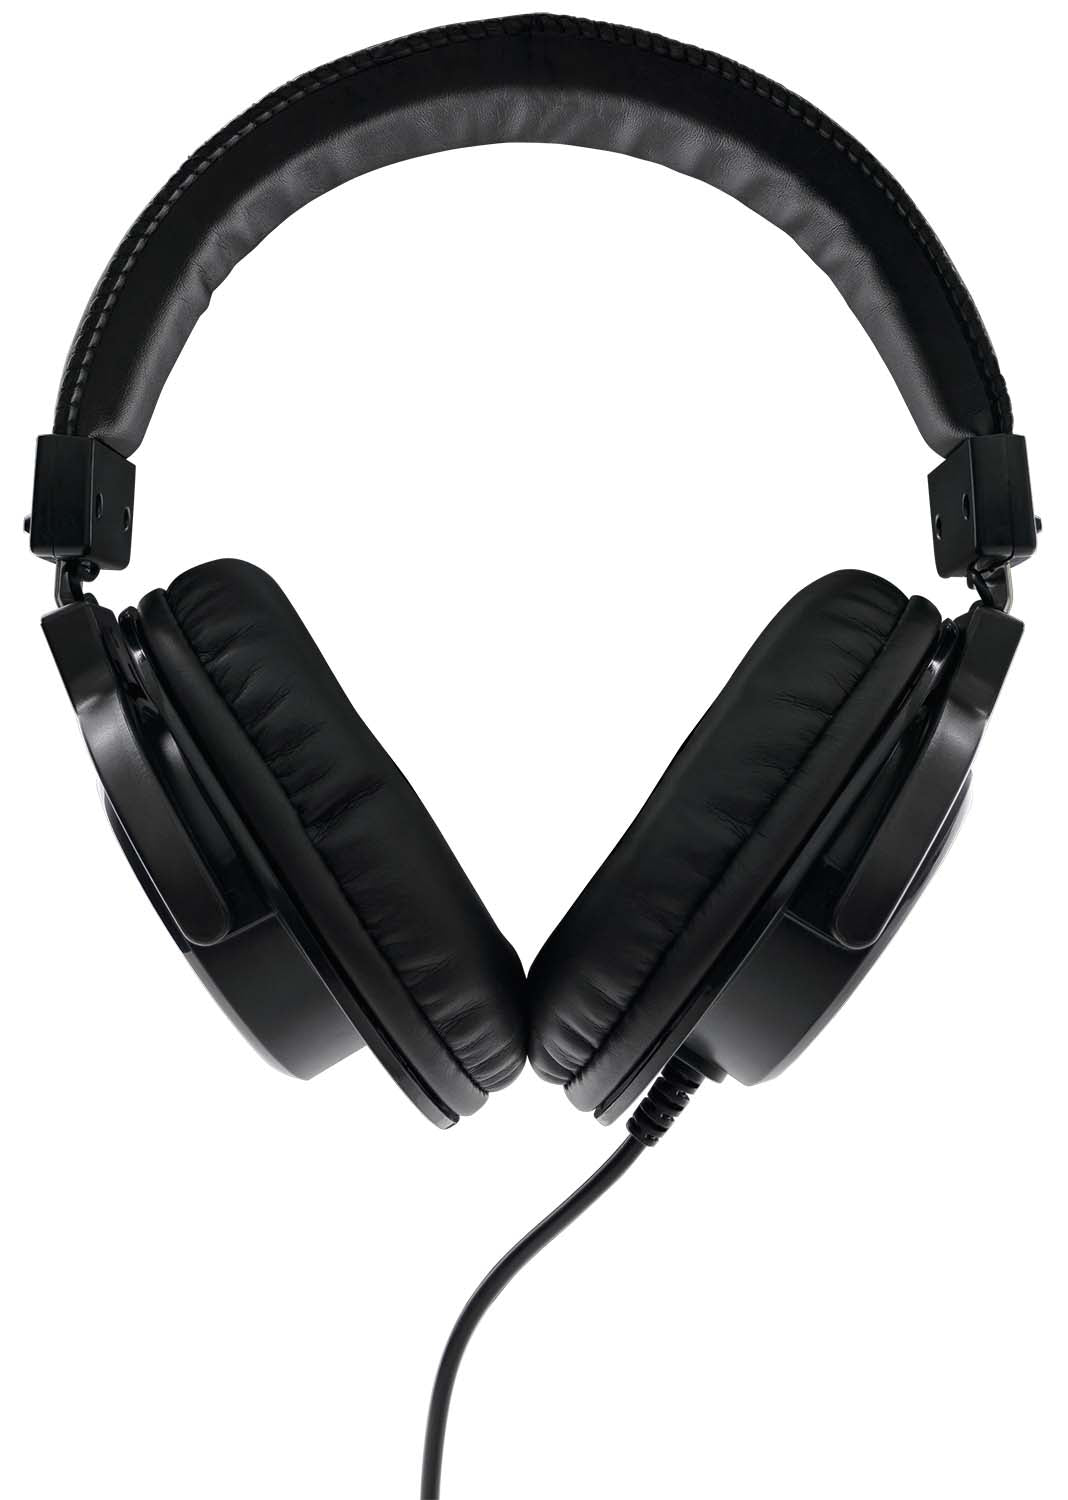 B-Stock: Mackie MC-100 Professional Closed-Back DJ Headphones by Mackie